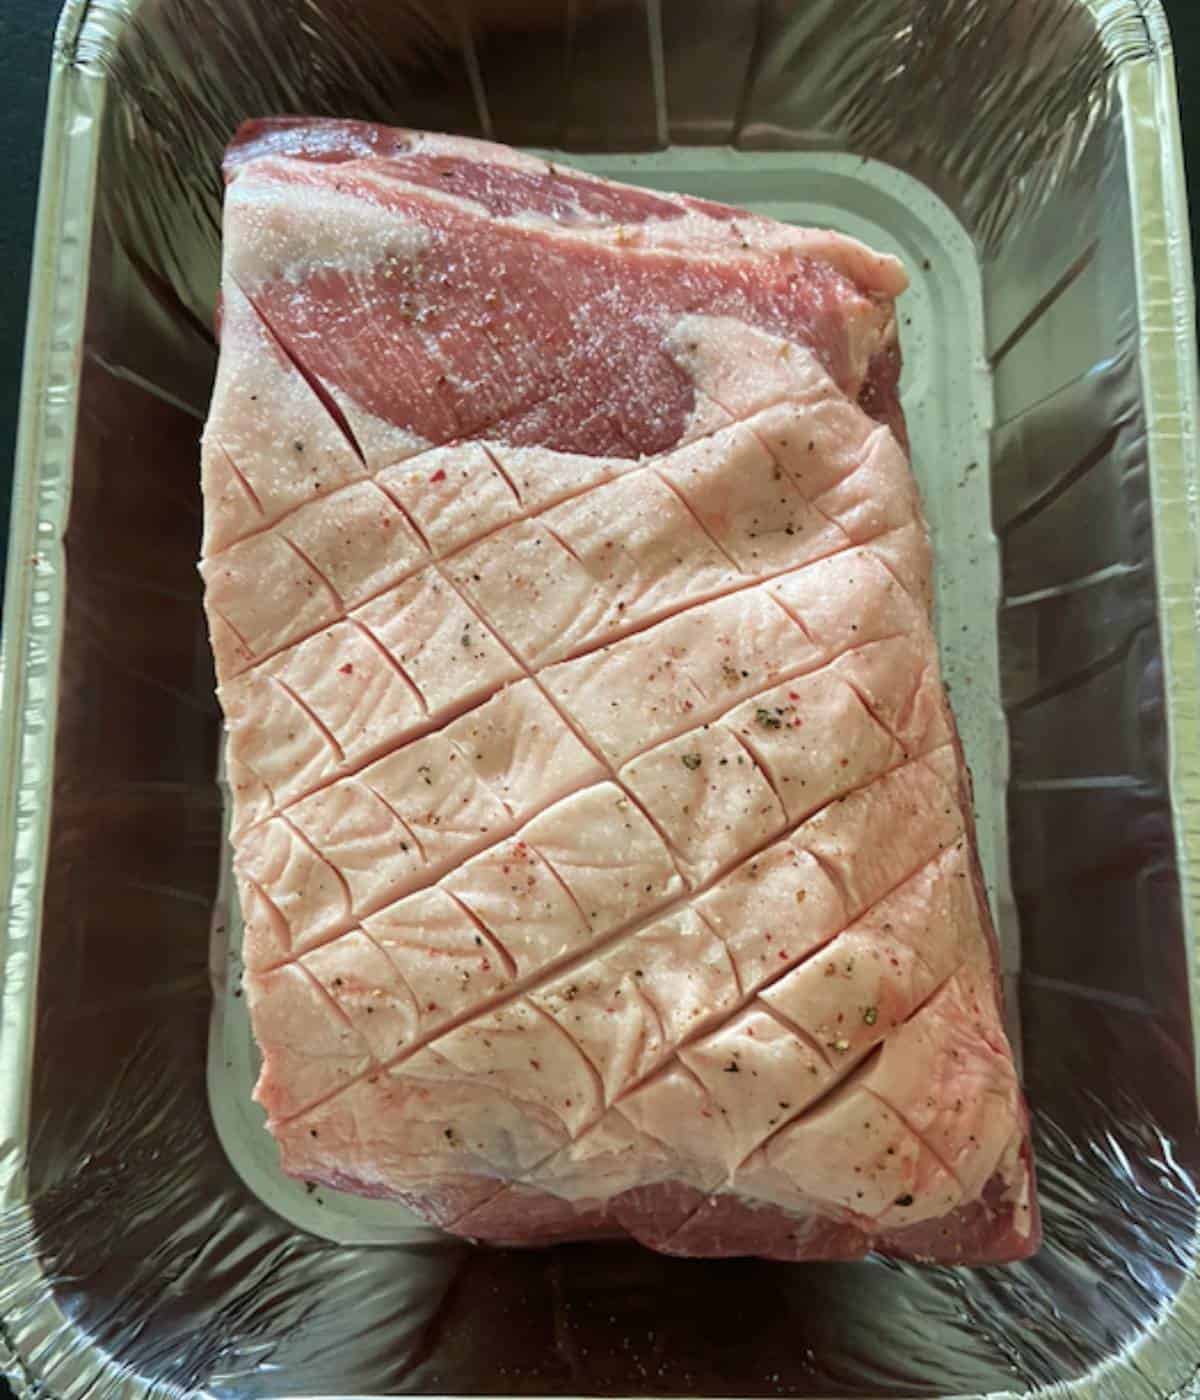 Scored pork butt in tin foil pan.